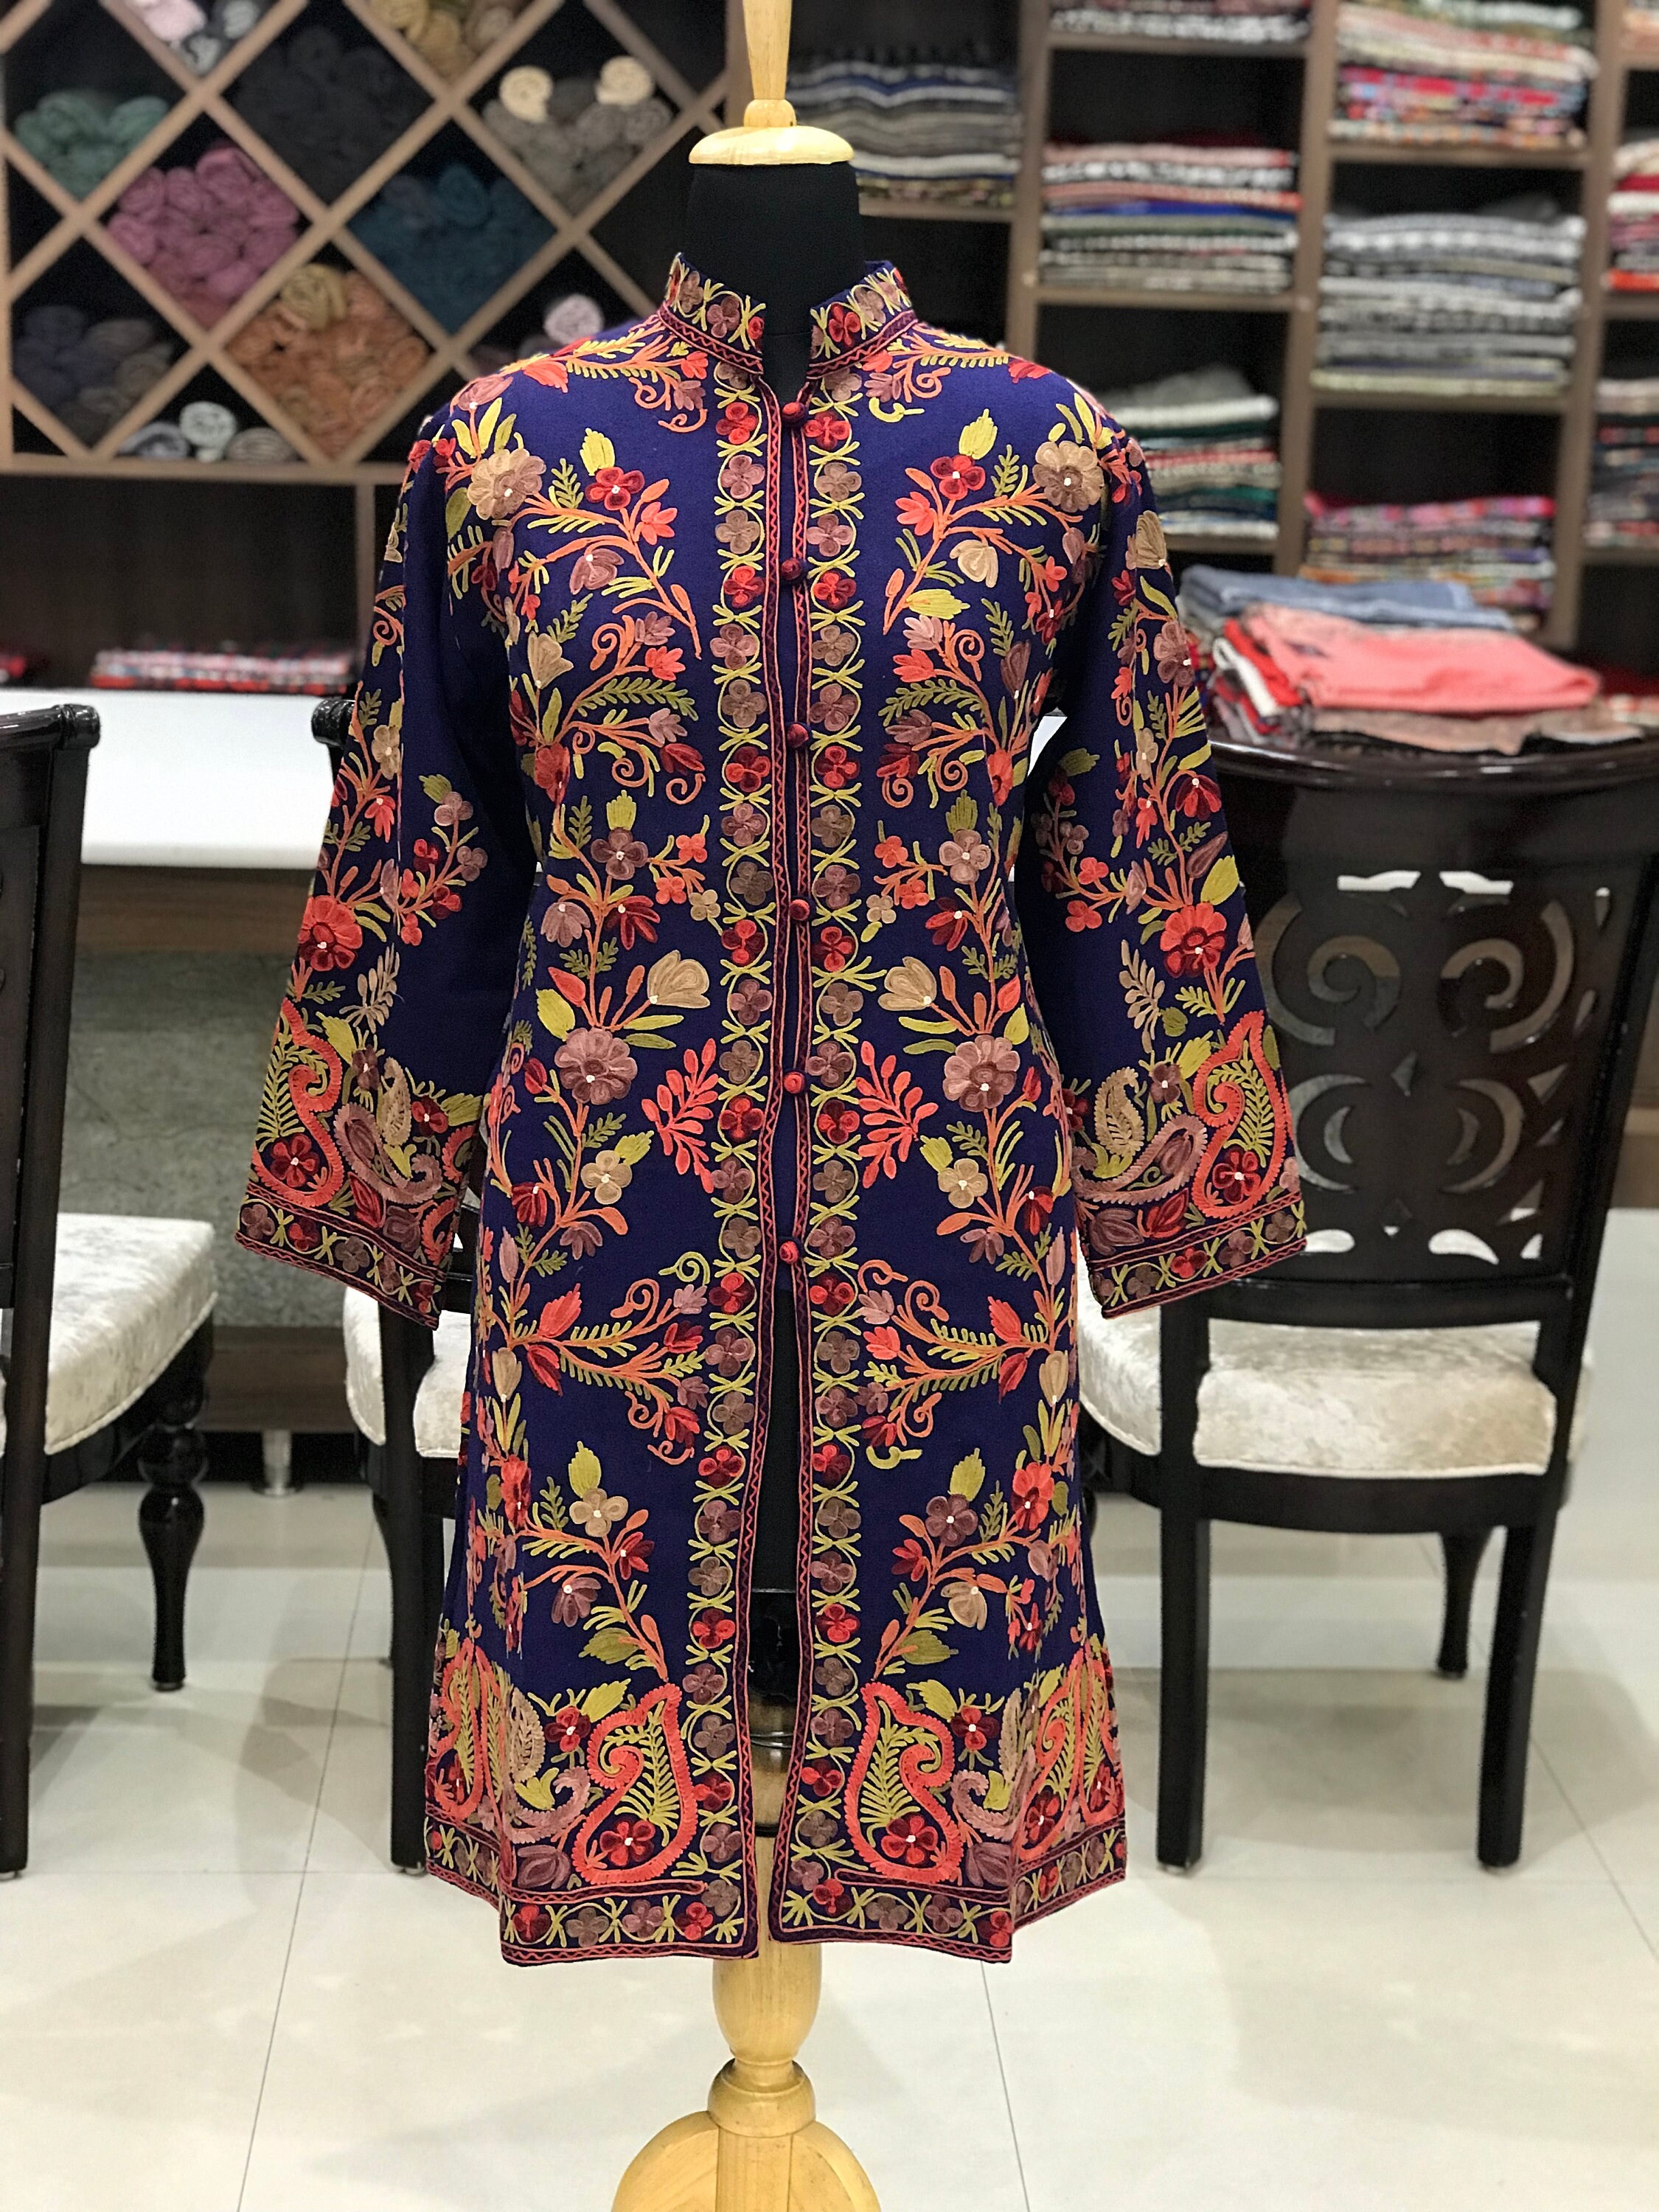 Kashmir Jacket long embroidered coat Bohemian Jacket silk summer jacket embroidered jacket embroidered silk jacket long length coat